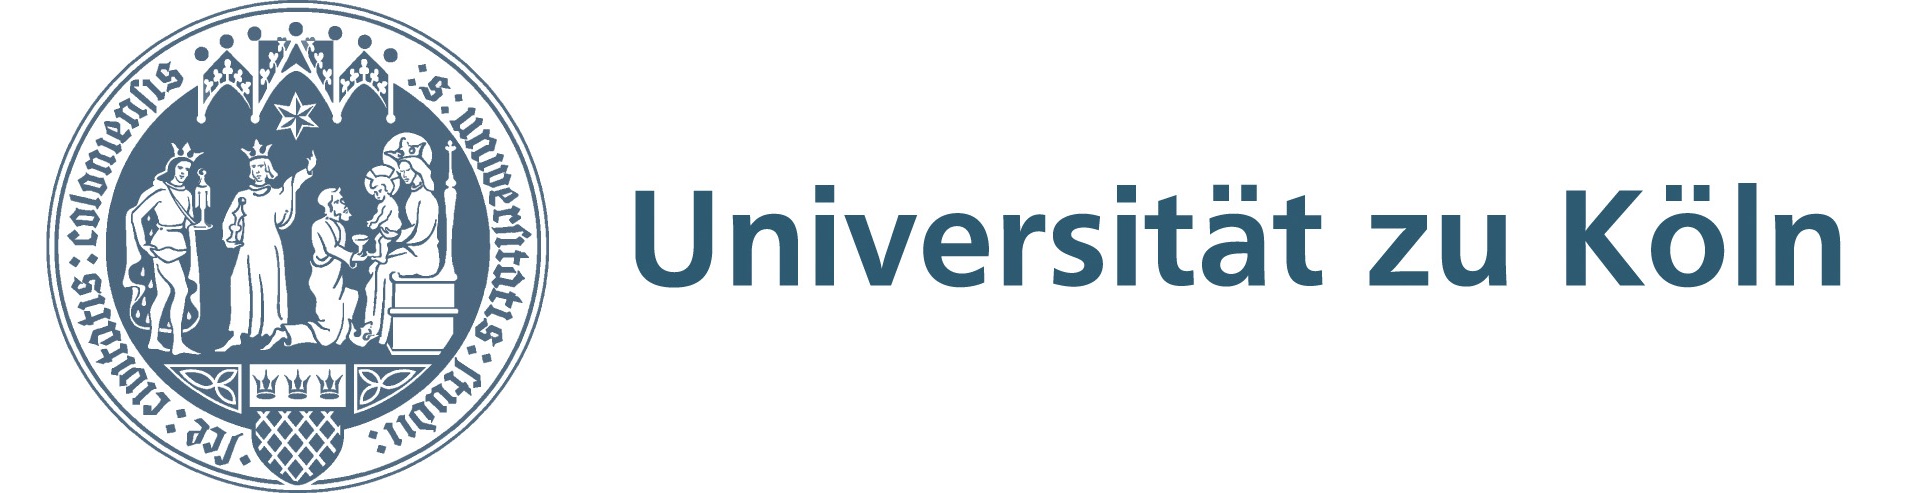 Uni Koeln_Schriftzug_Logo.jpg